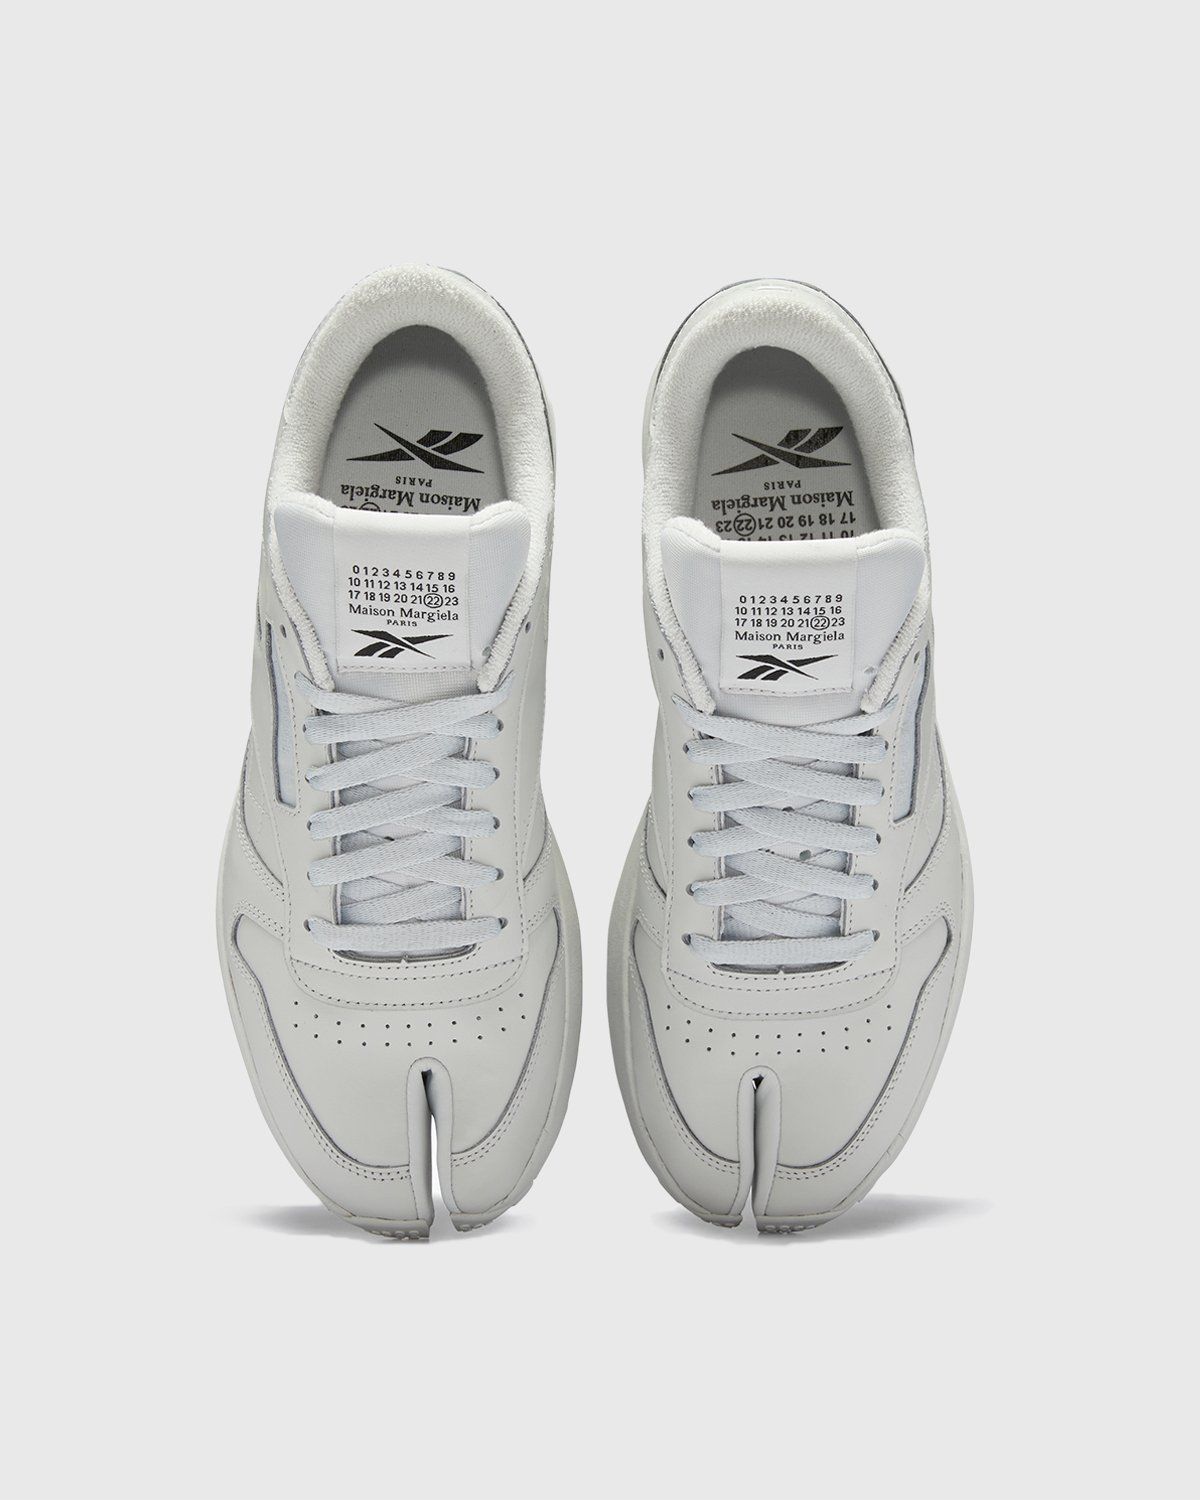 Maison Margiela x Reebok – Classic Leather Tabi Grey - Low Top Sneakers - Grey - Image 4